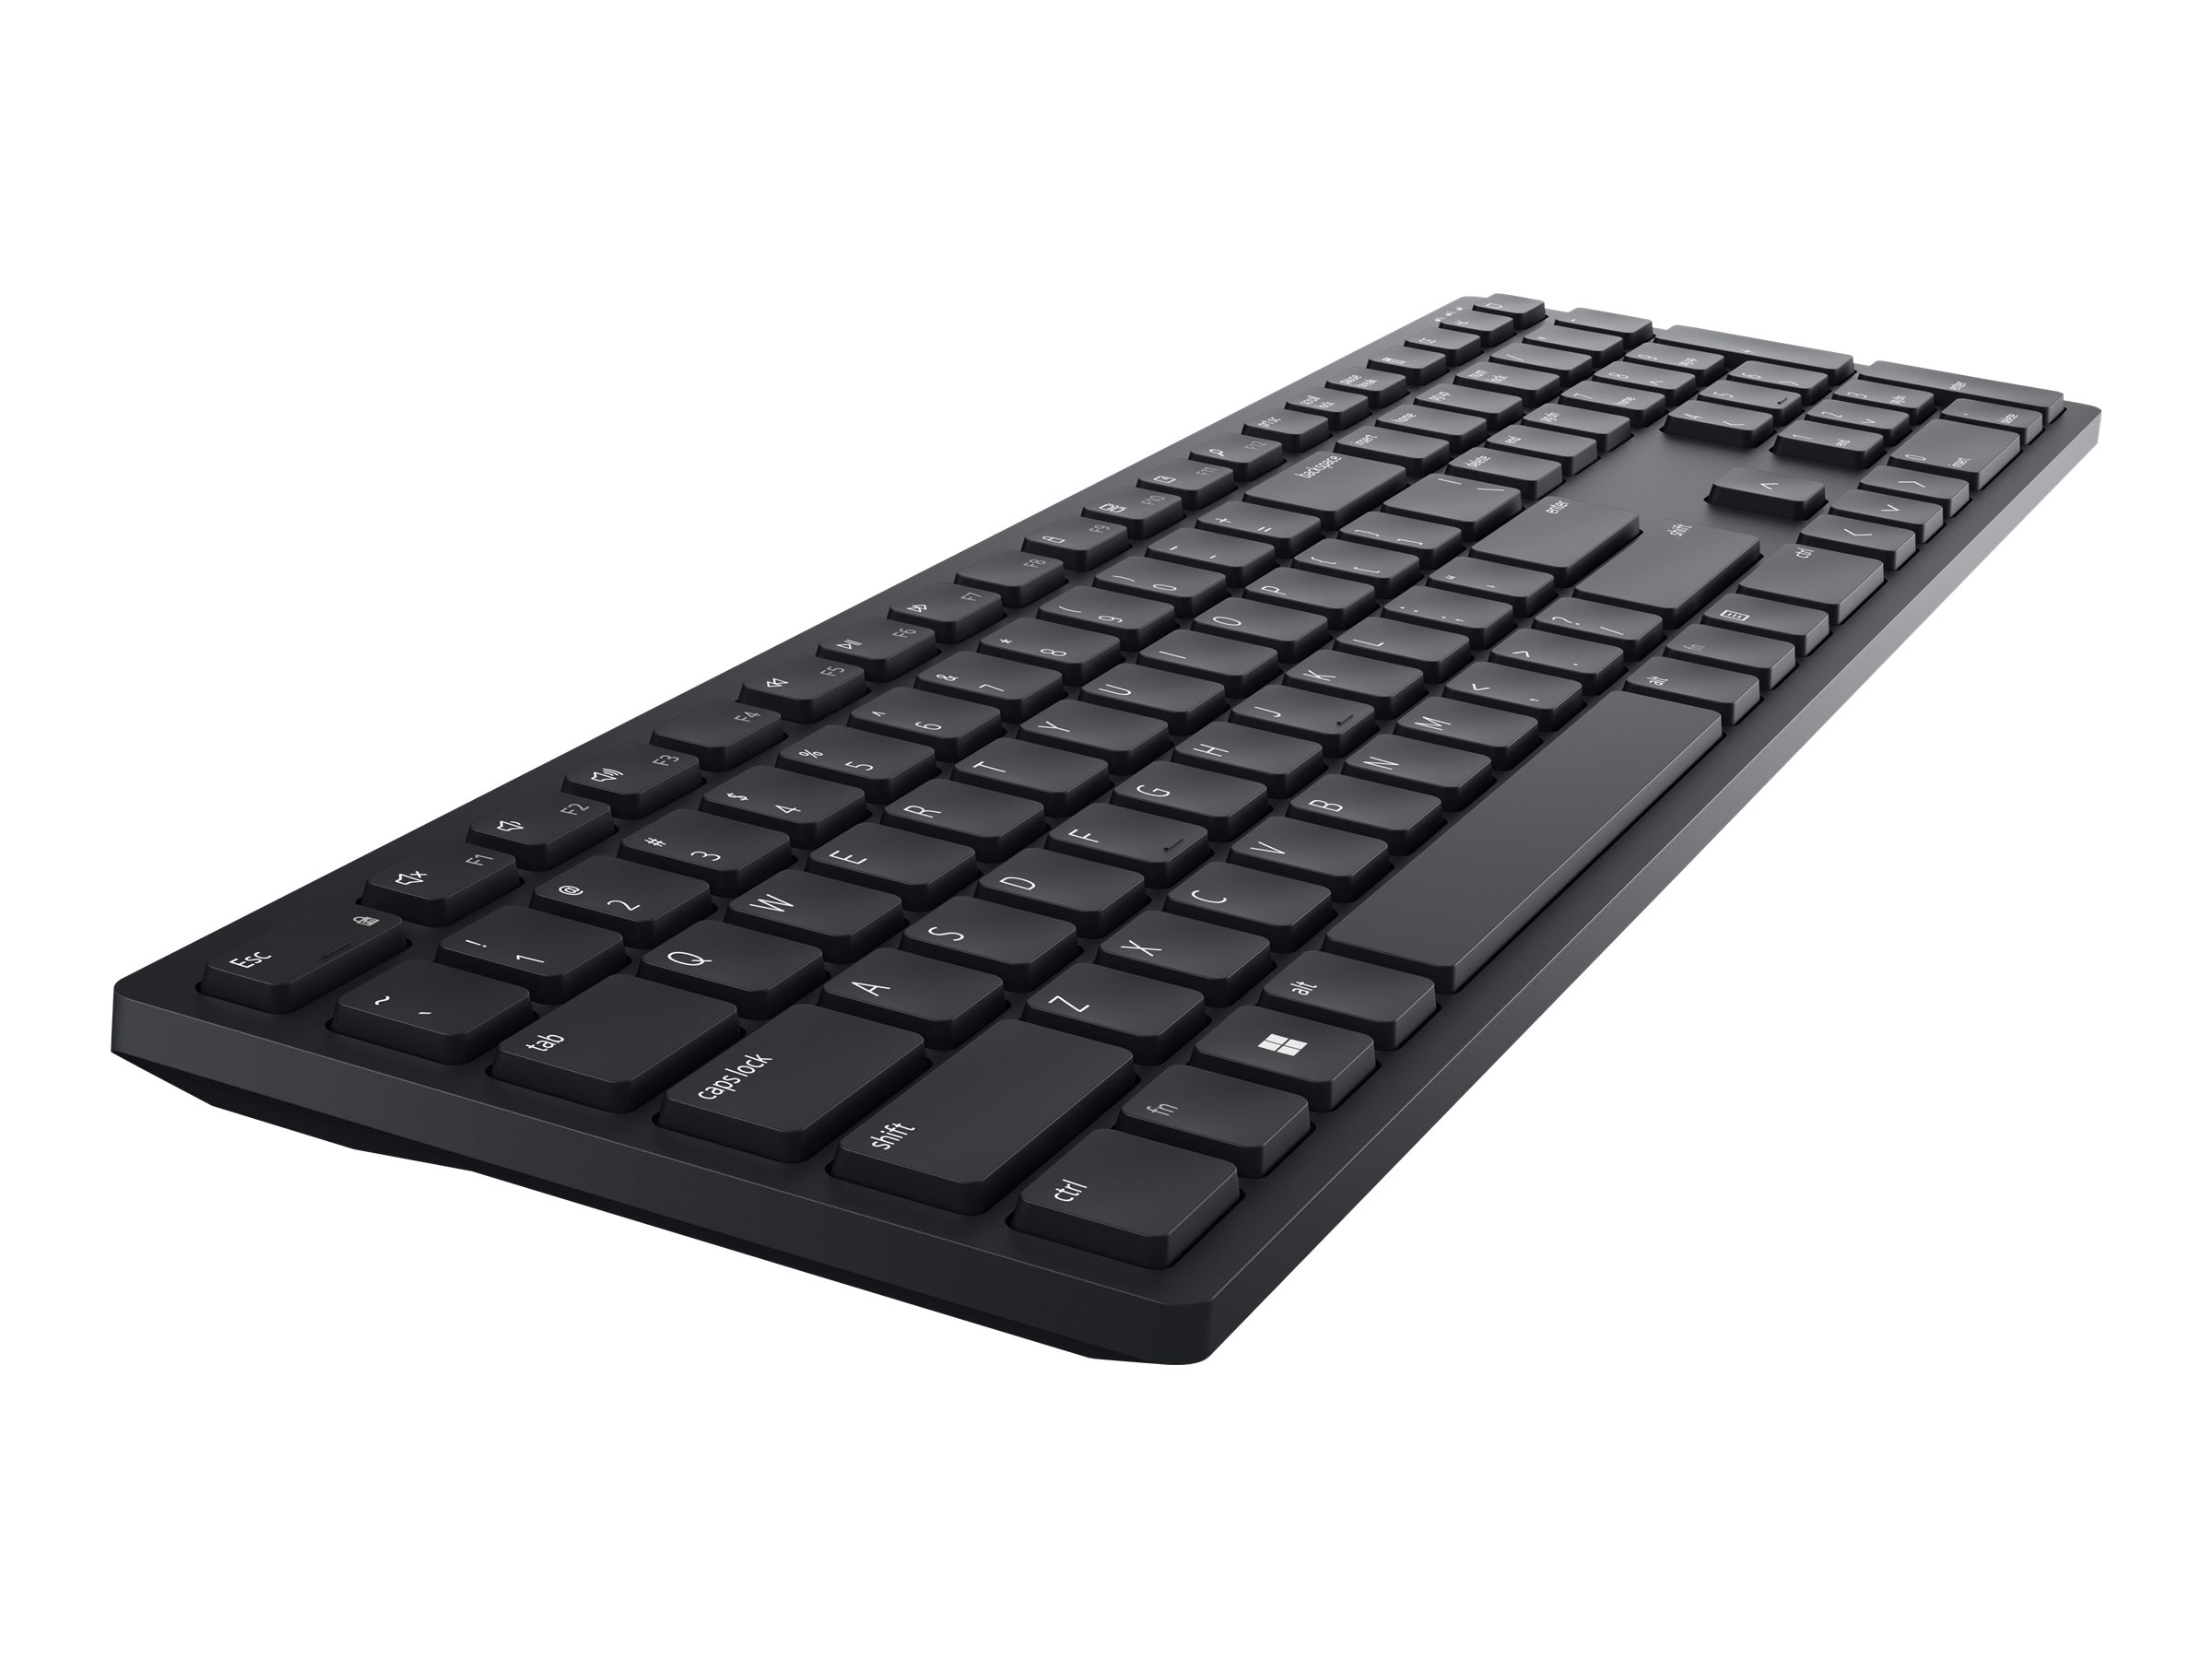 DELL Wireless Keyboard - KB500 - German QWERTZ